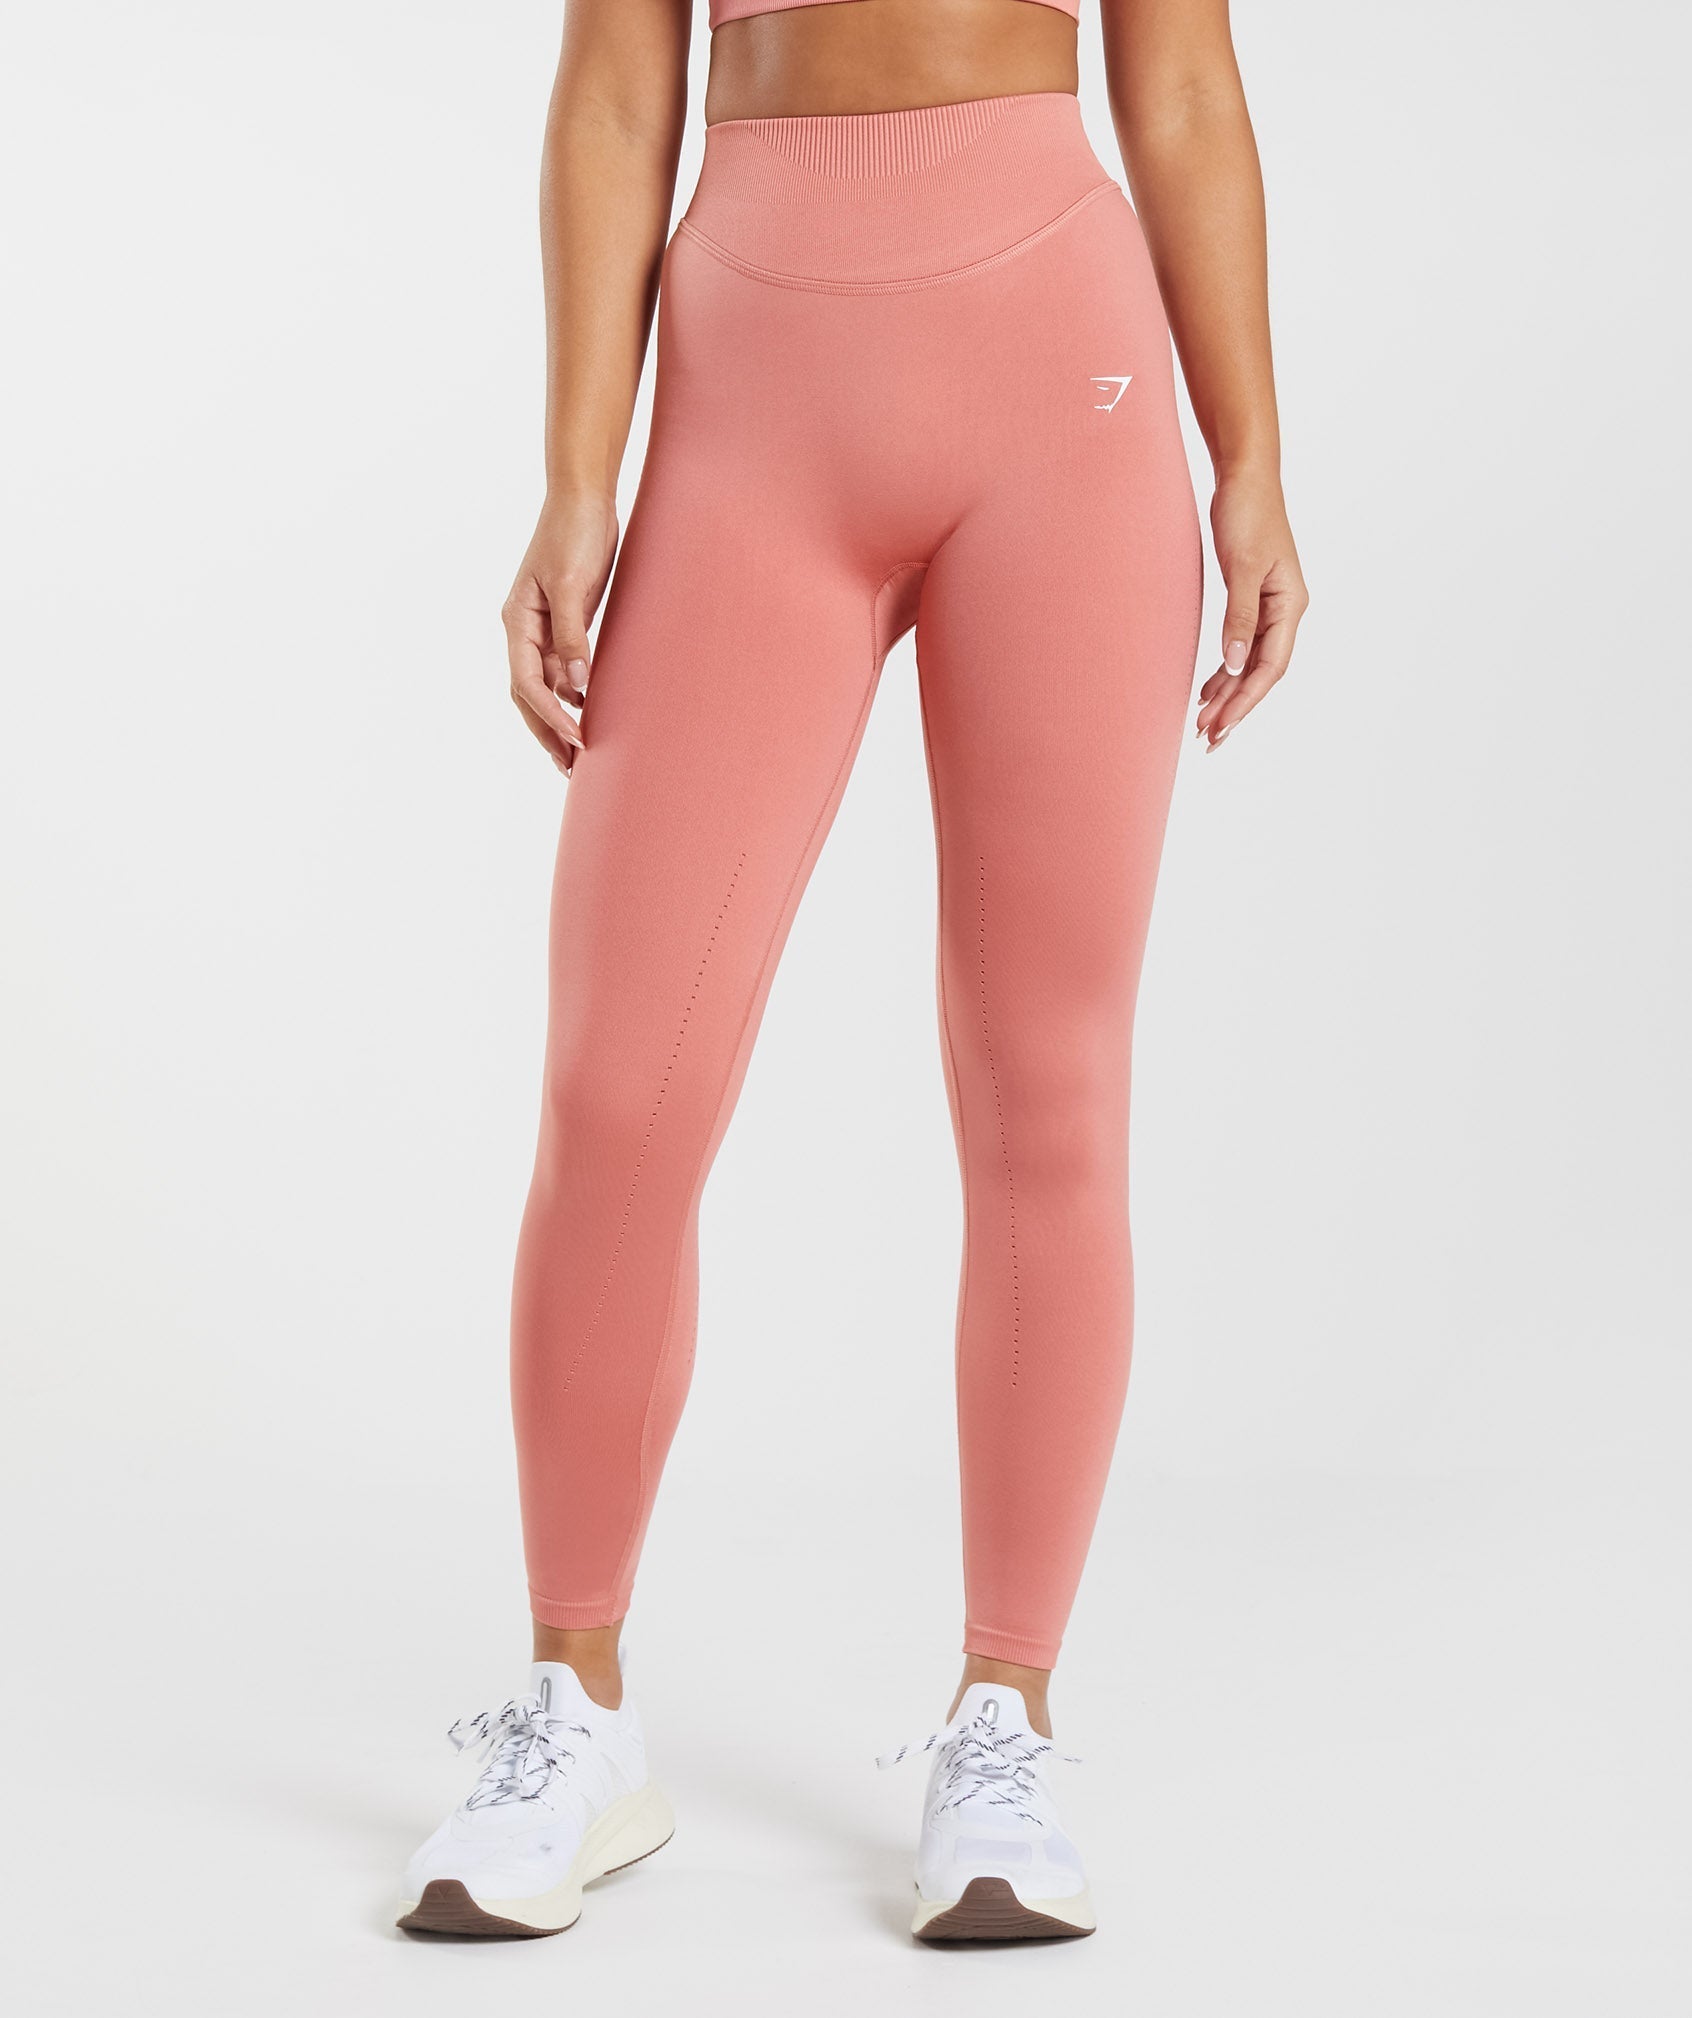 Gym Shark - Pink Camo Gymshark Seamless Leggings on Designer Wardrobe